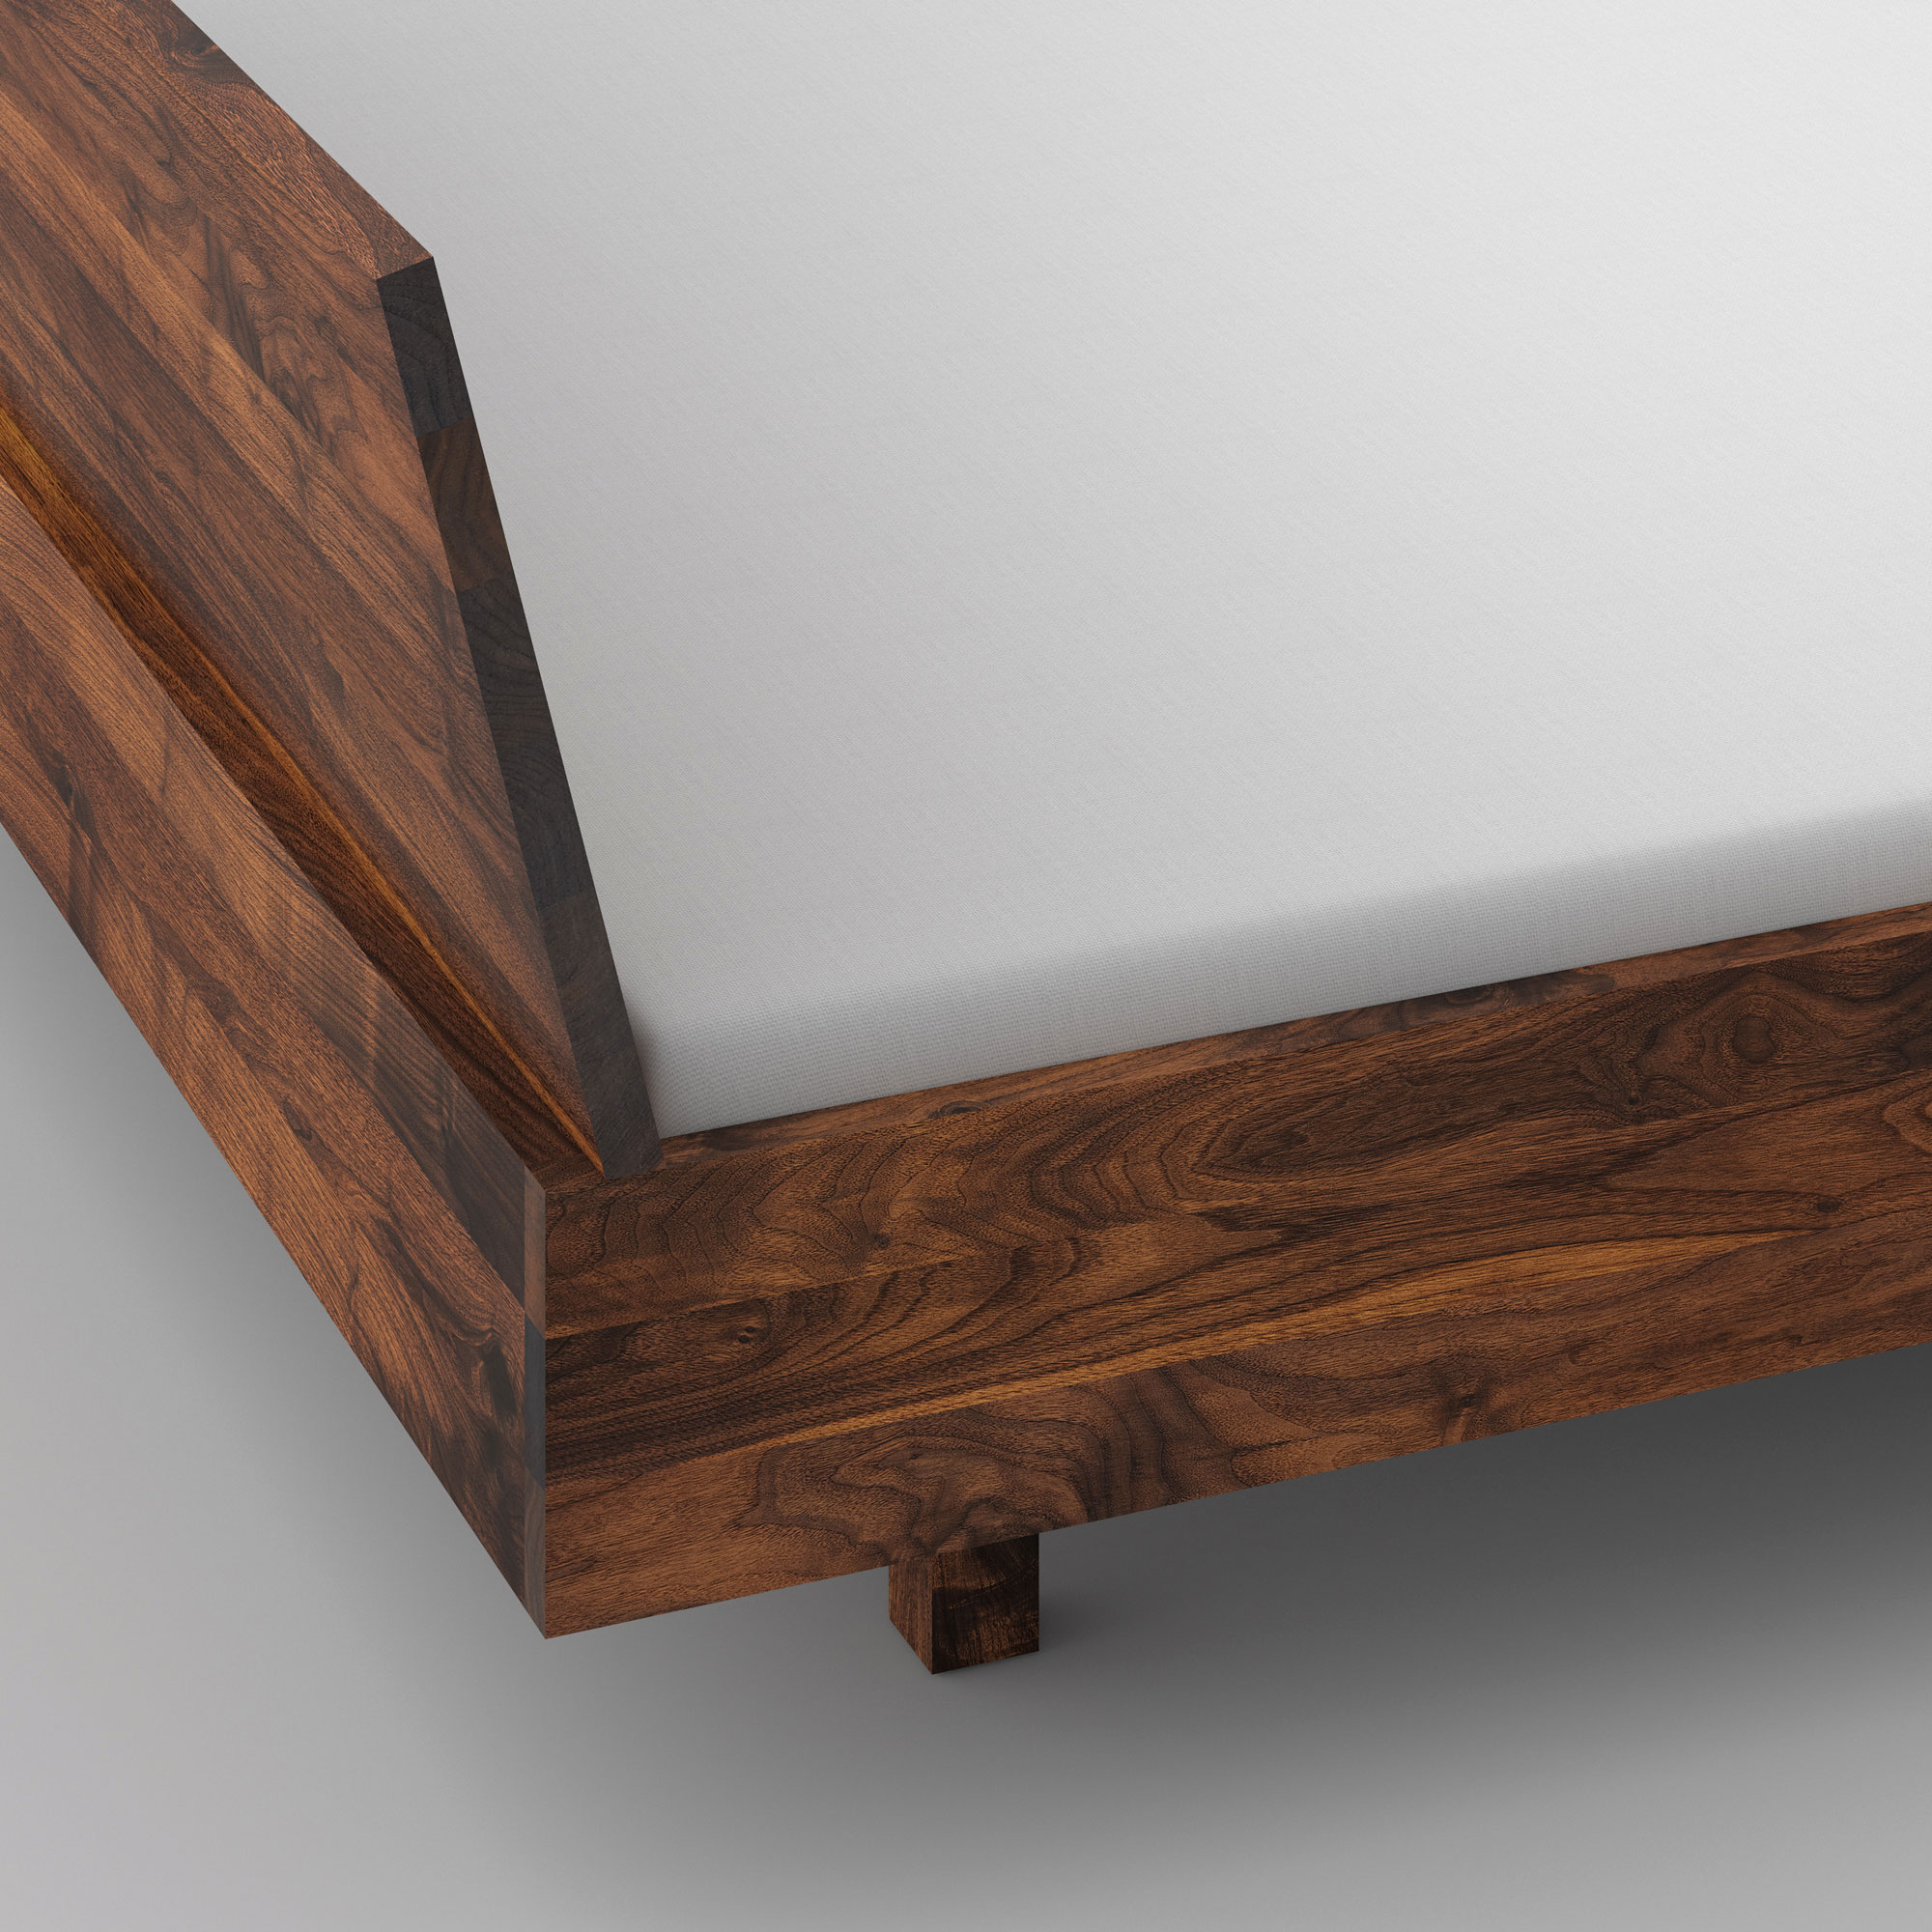 Design Bed QUADRA cam4 custom made in solid wood by vitamin design